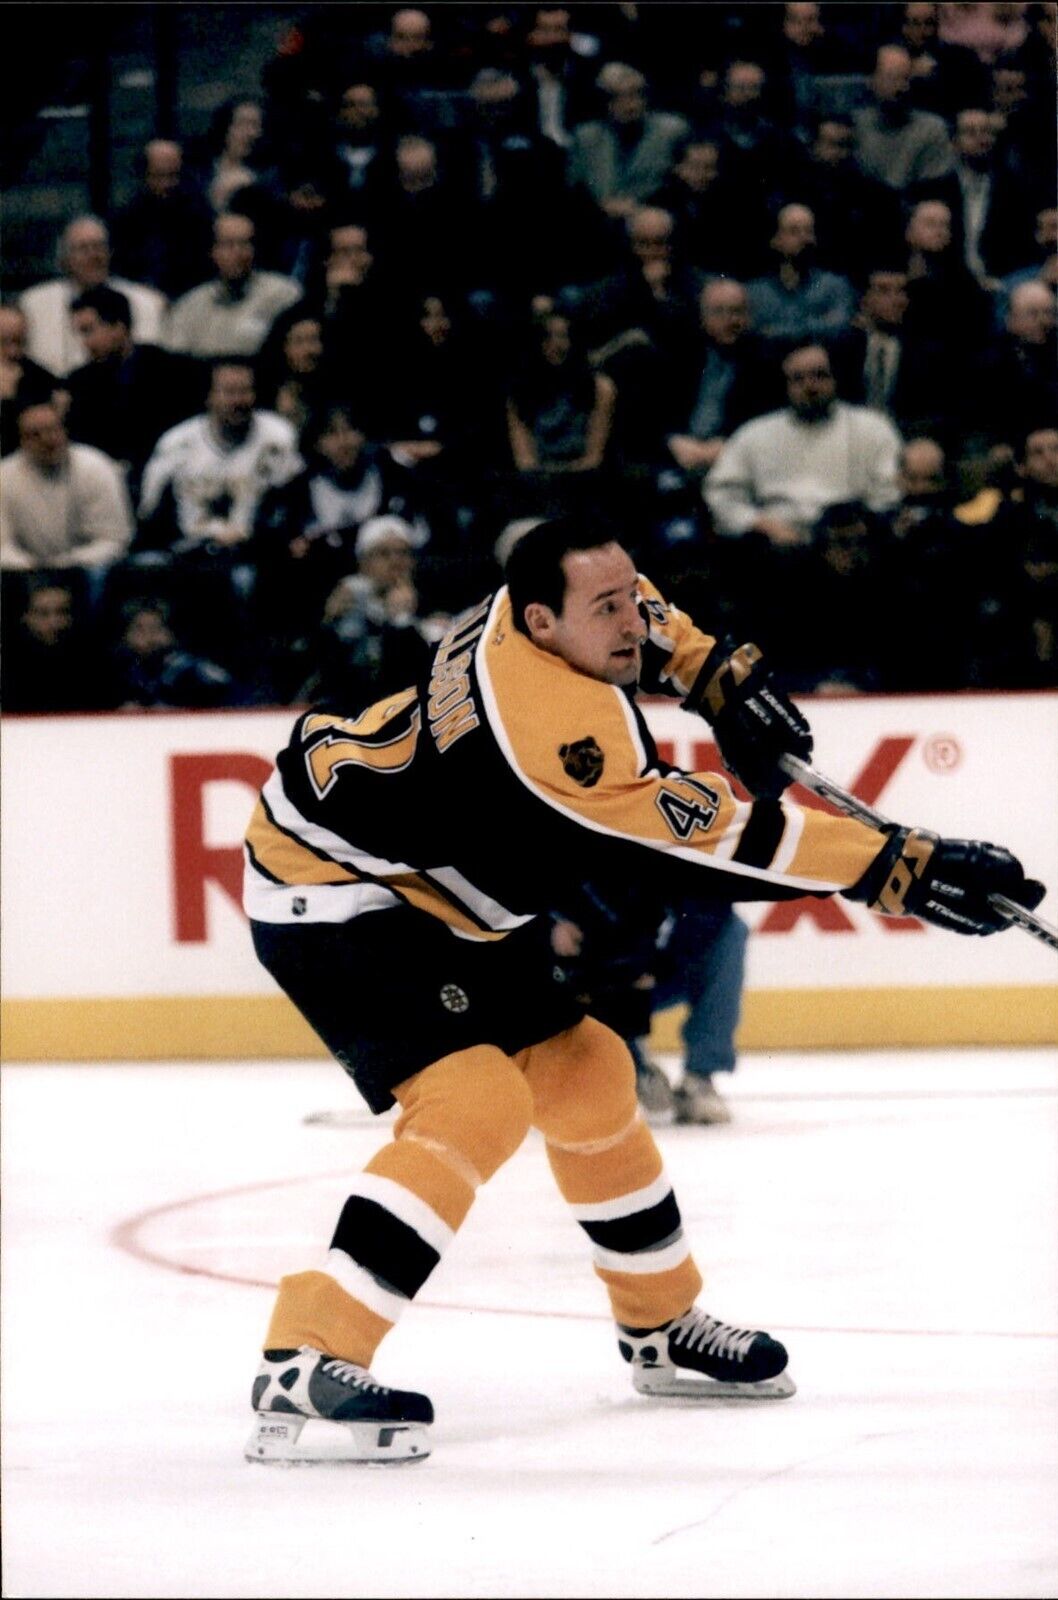 PF37 2001 Orig Photo NHL HOCKEY ALL-STAR GAME BOSTON BRUINS CENTER JASON ALLISON